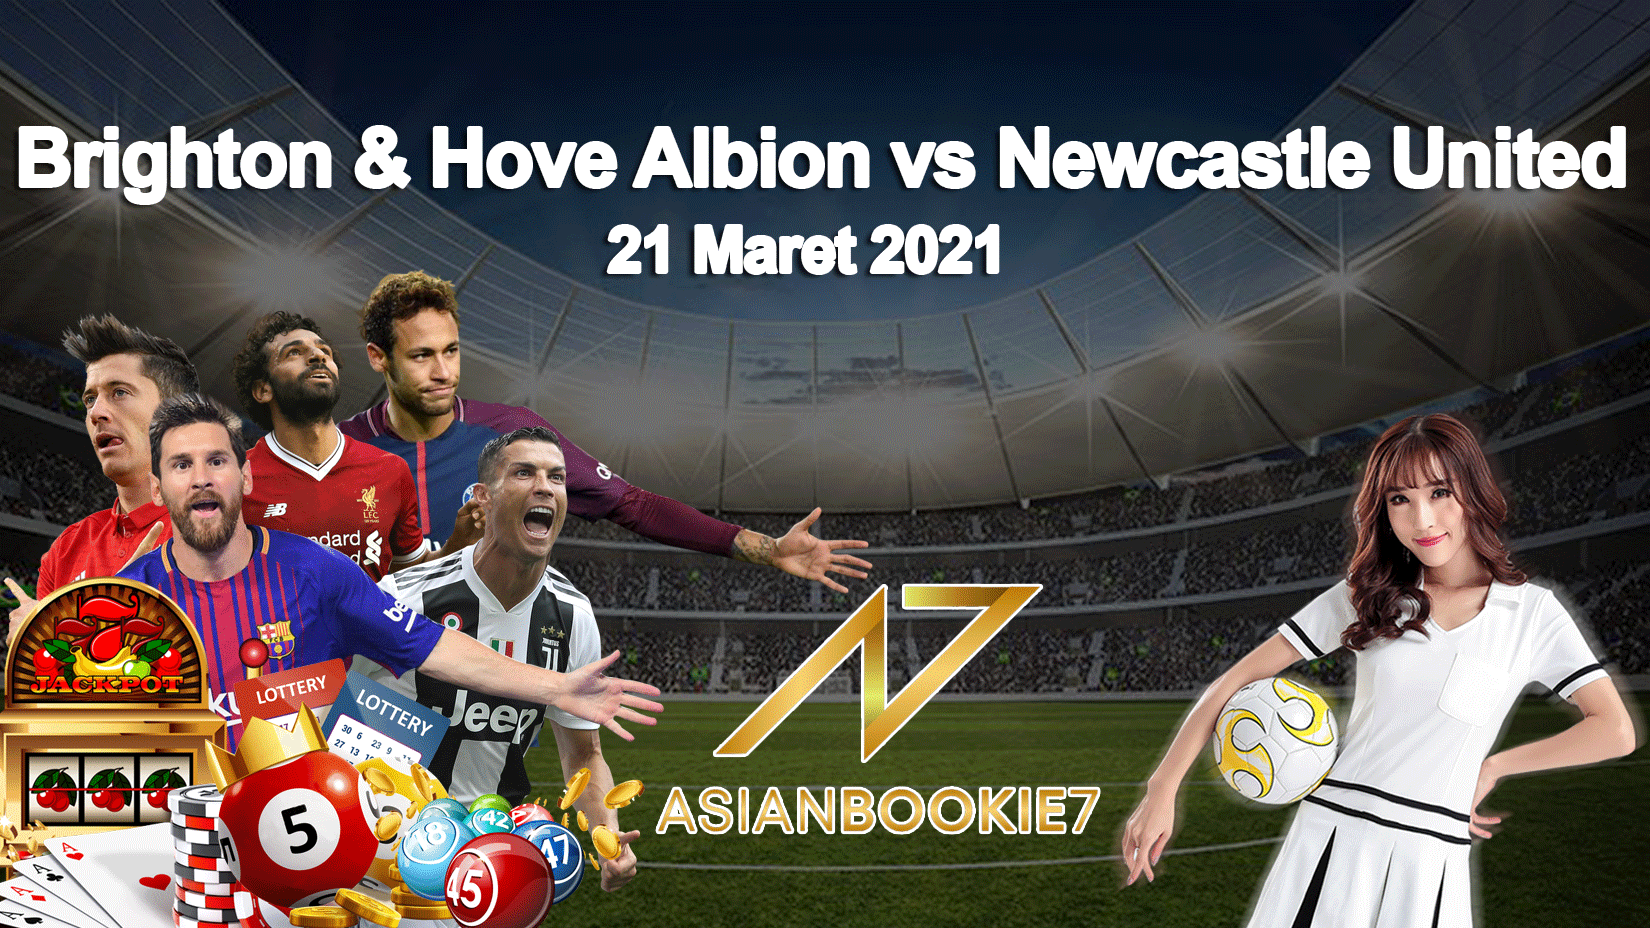 Prediksi-Brighton-&-Hove-Albion-vs-Newcastle-United-21-Maret-2021